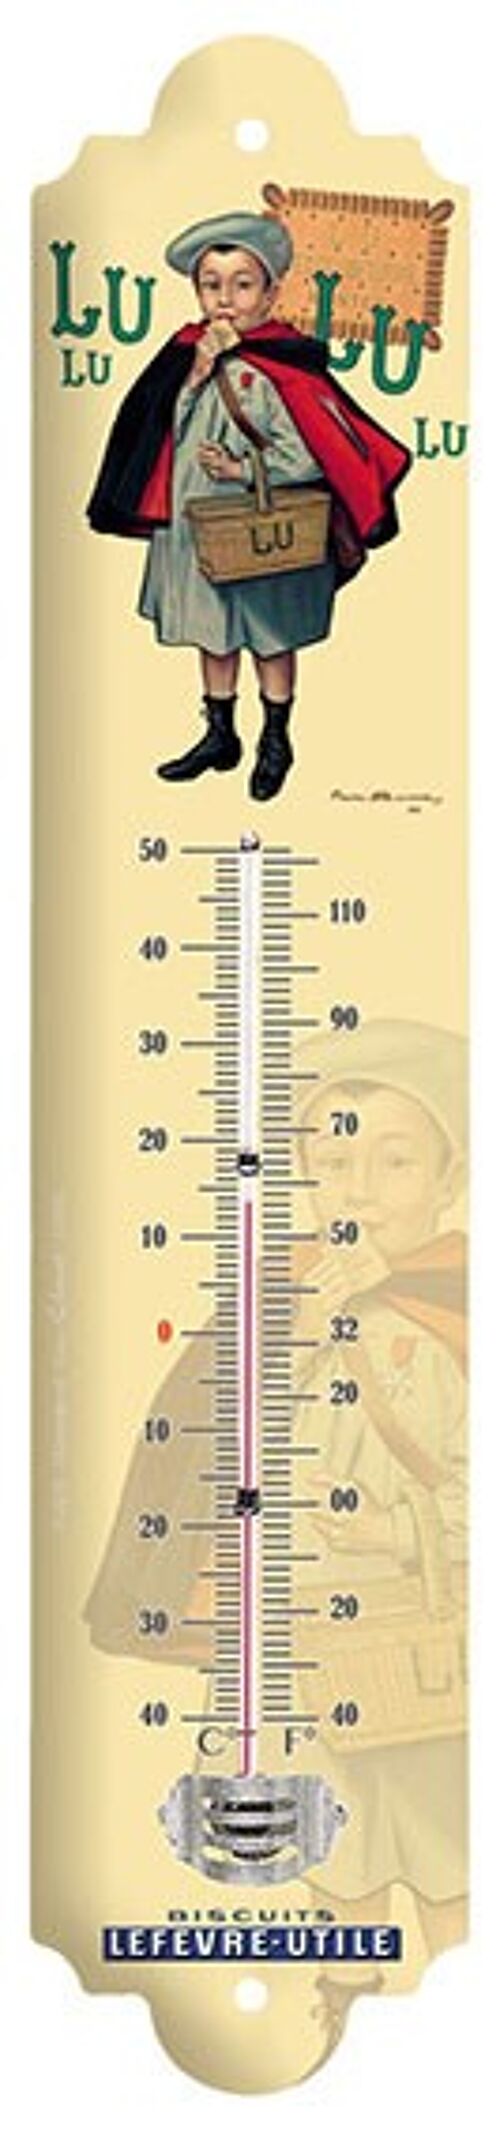 Thermomètre Vintage Lu ecolier - bouisset thermo petit modele